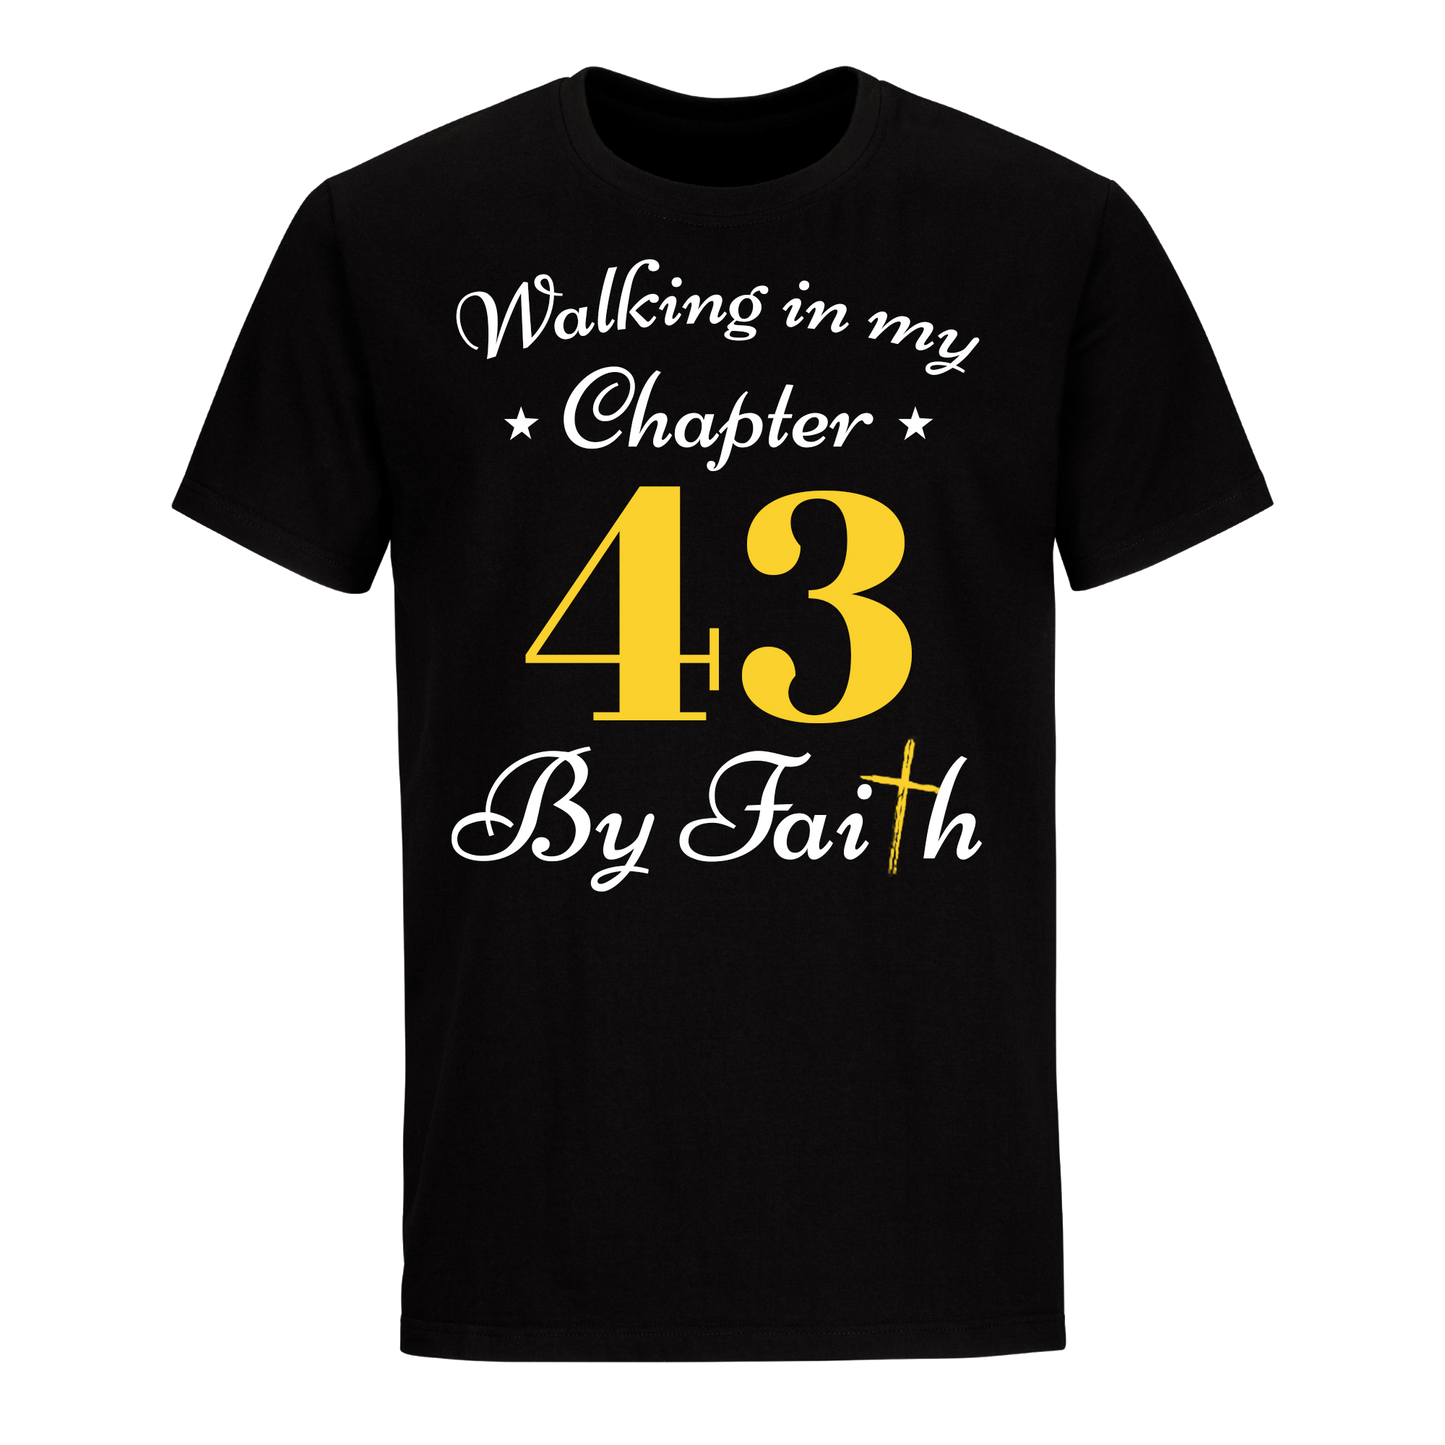 WALKING CHAPTER 43 BY FAITH UNISEX SHIRT